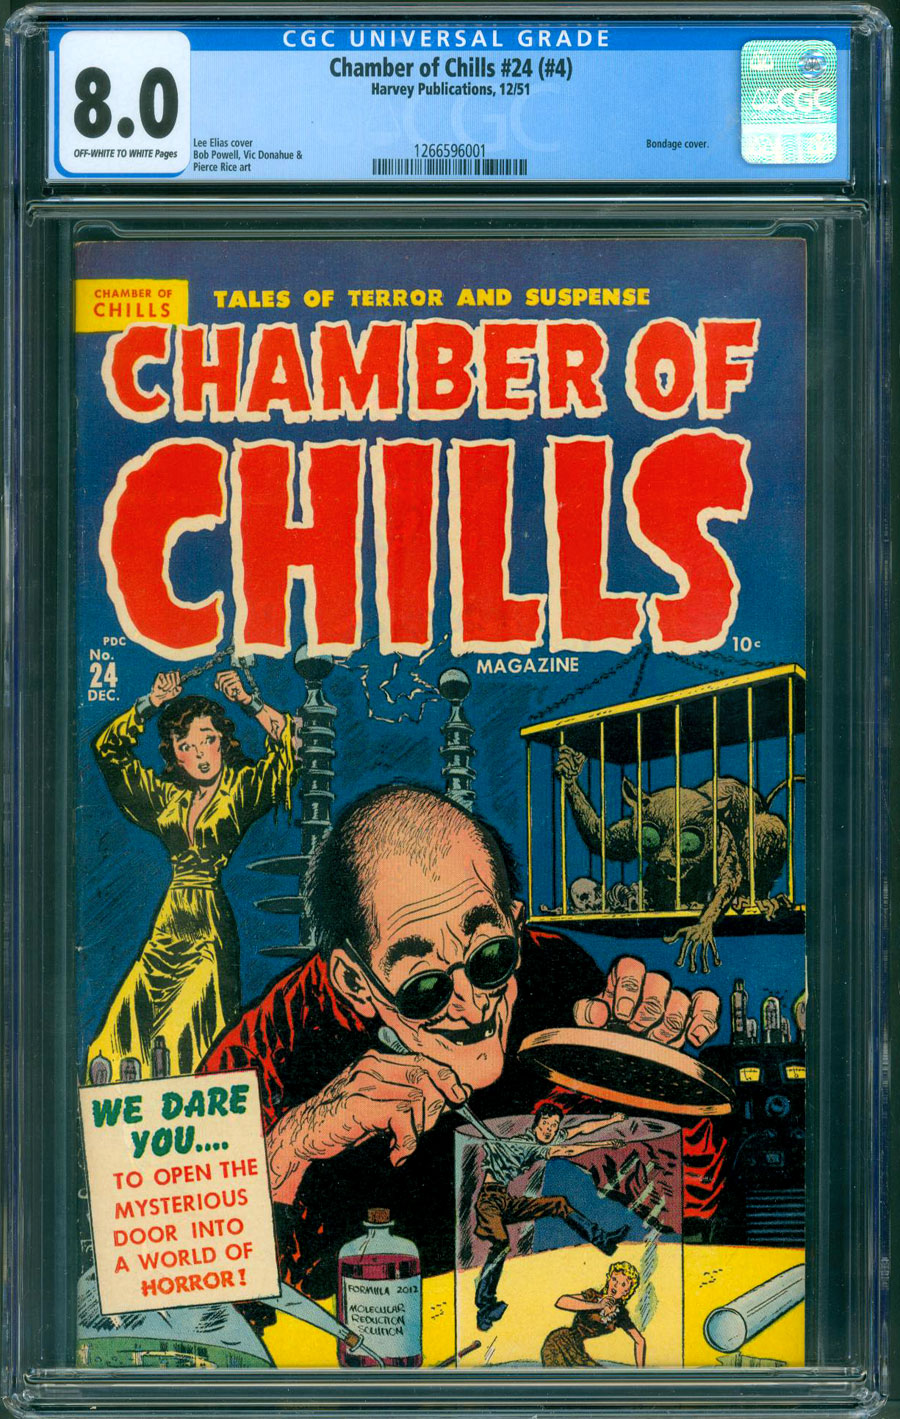 ComicConnect - CHAMBER OF CHILLS (1951-54) #24 - CGC VF: 8.0